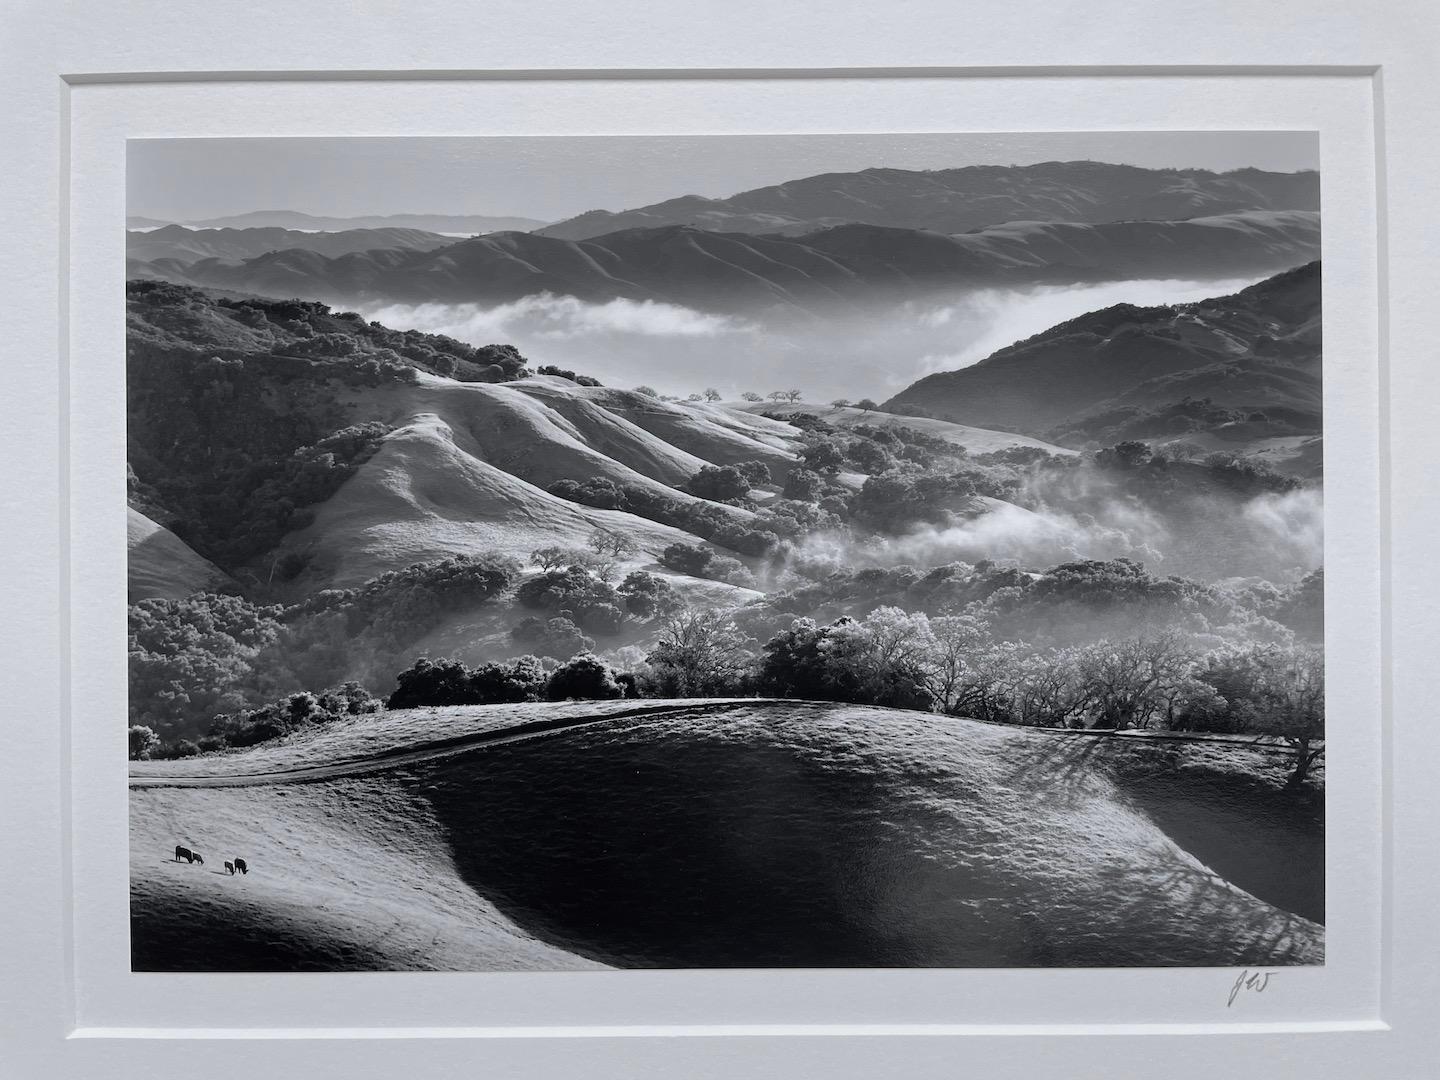 Landscape Photograph John Wimberley - Carmel Valley de Halls Ridge, Californie